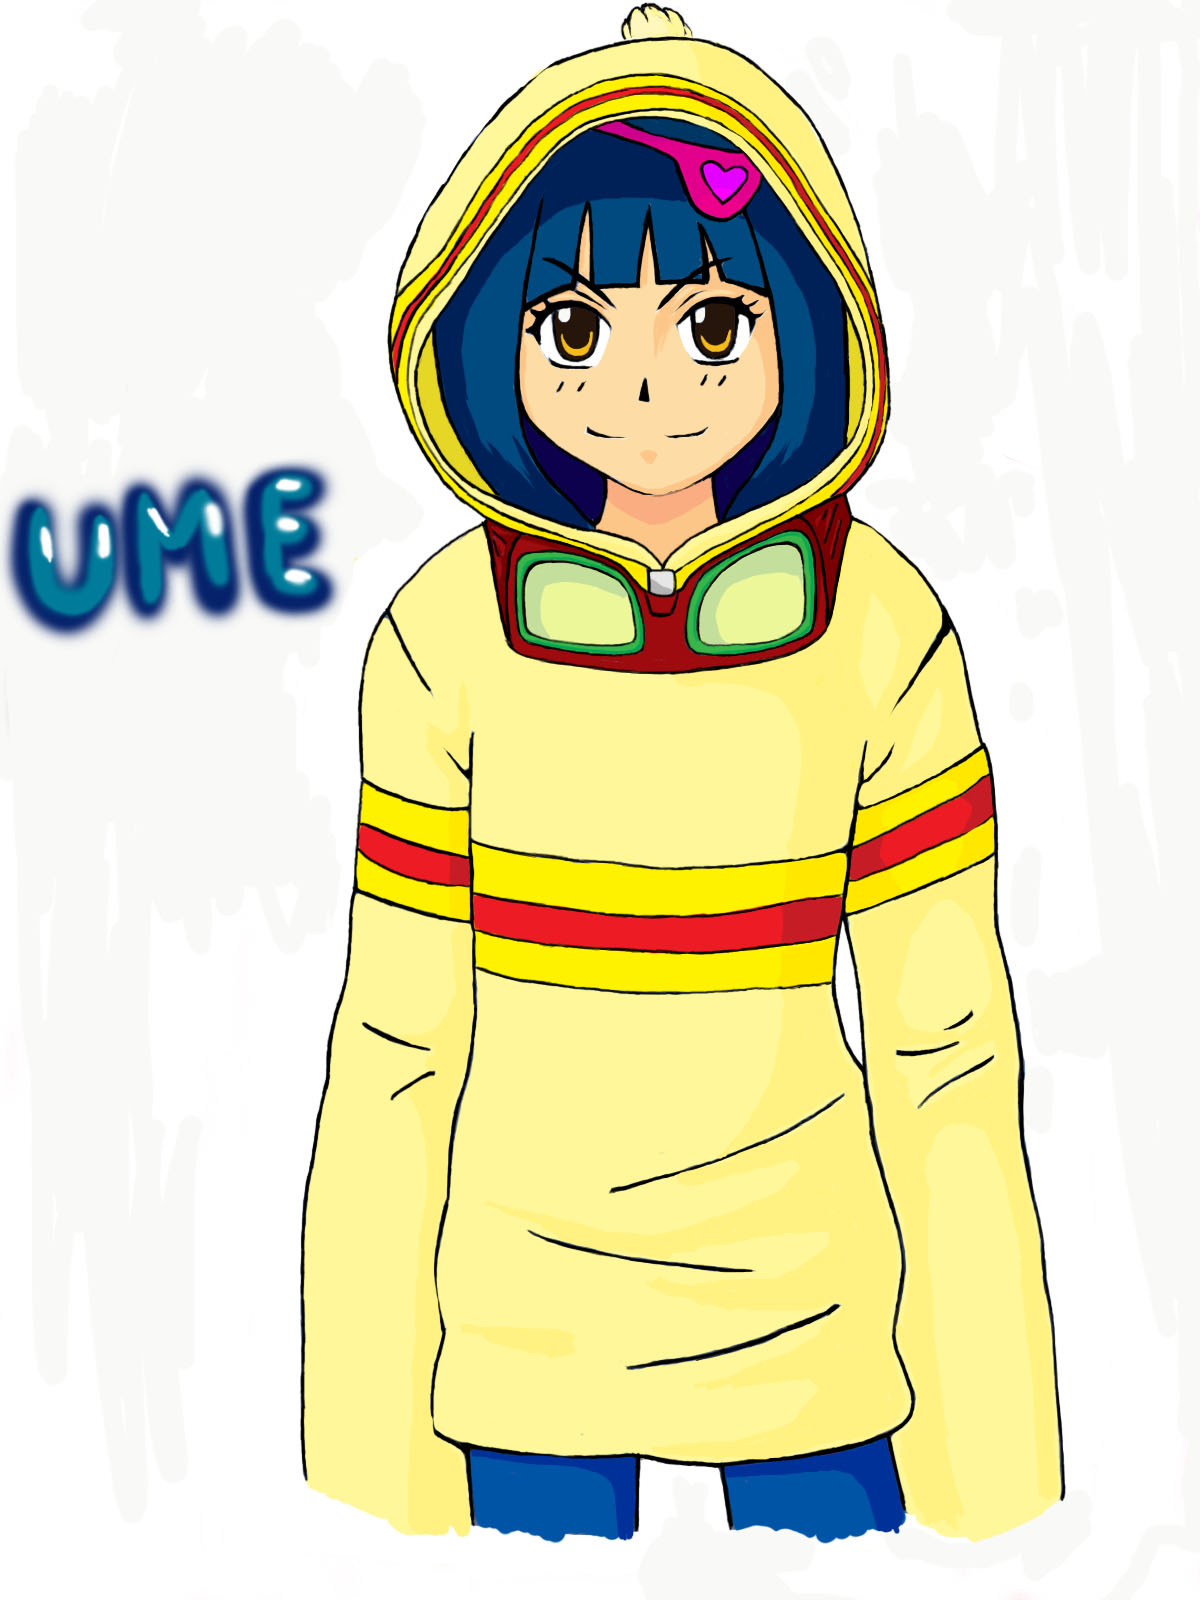 Ume-Air Gear by evi19koko